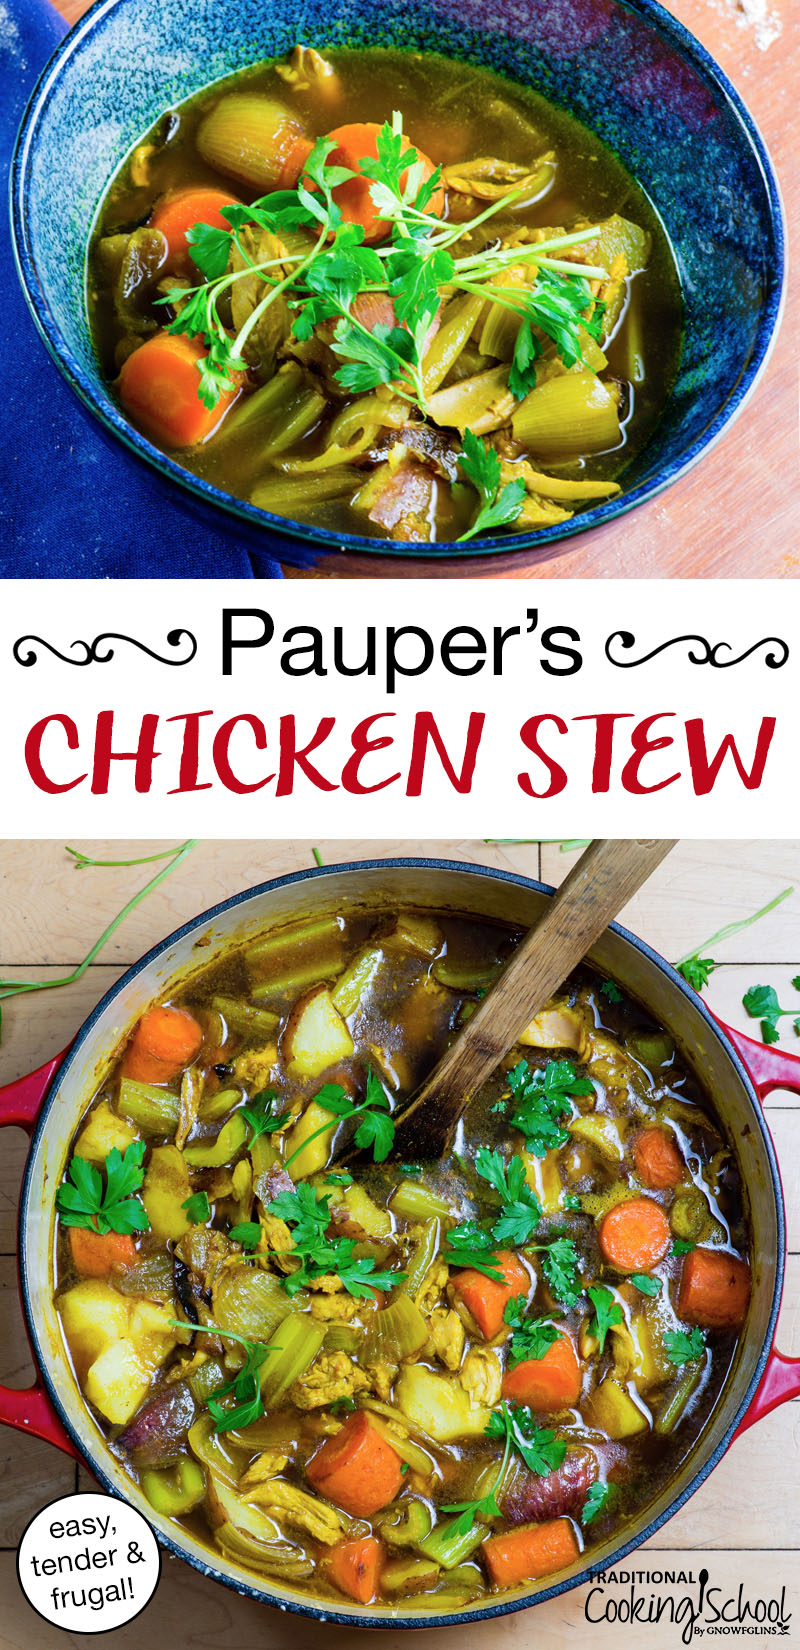 photo collage of chicken and veggie stew, with test overlay: "Pauper's Chicken Stew (easy, tender & frugal!)"